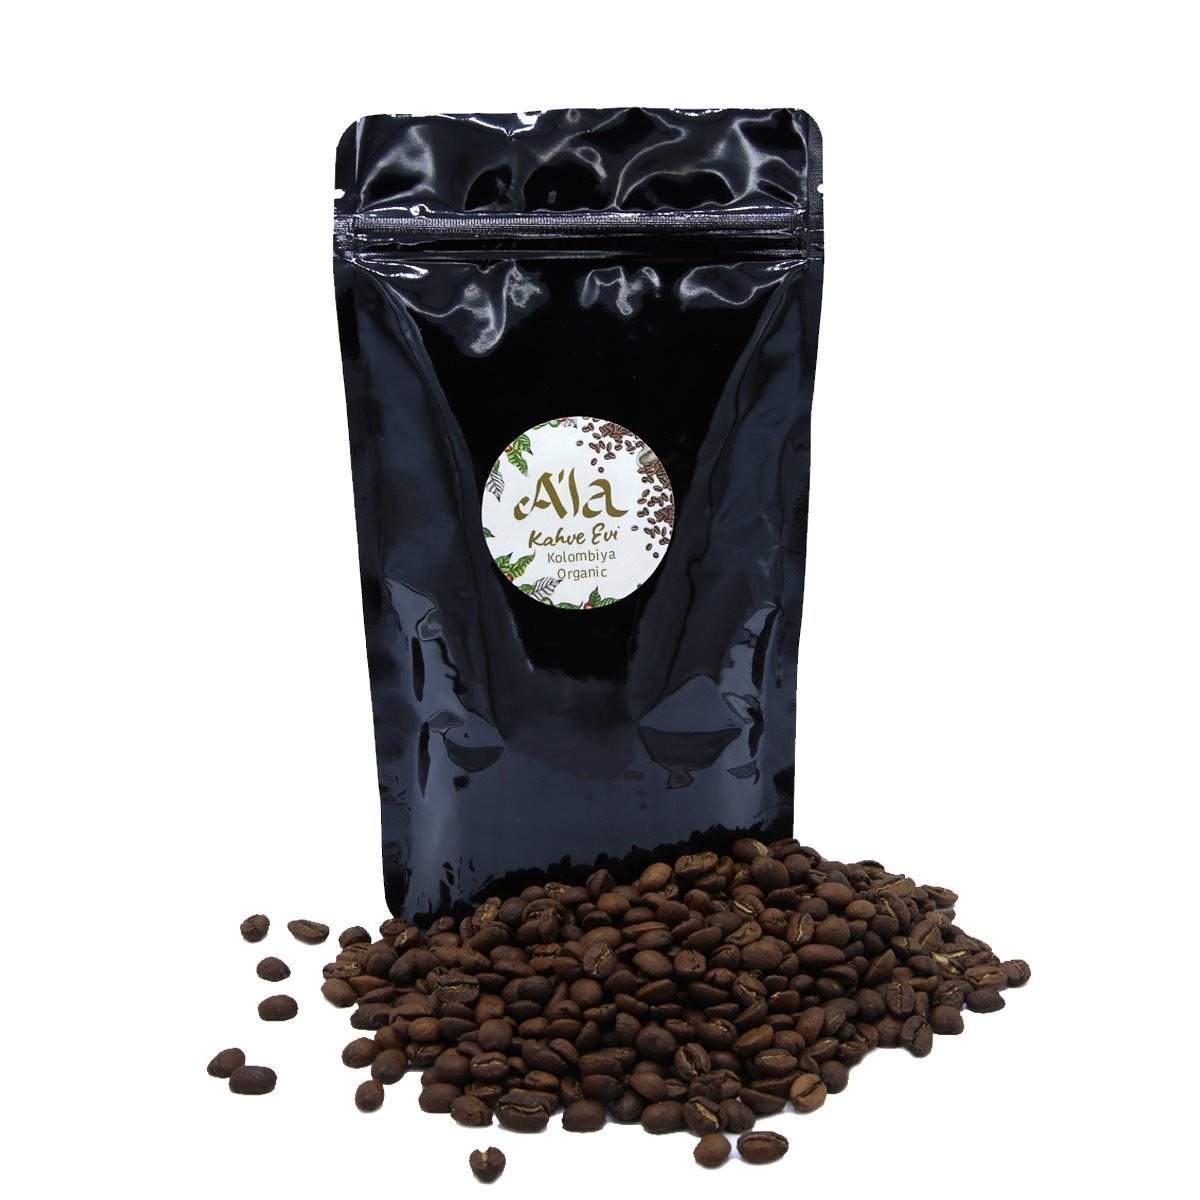 Kolombiya Organic Excelso Sierra Nevada - Kavrulmuş Kahve Çekirdeği  250 g - B.2030